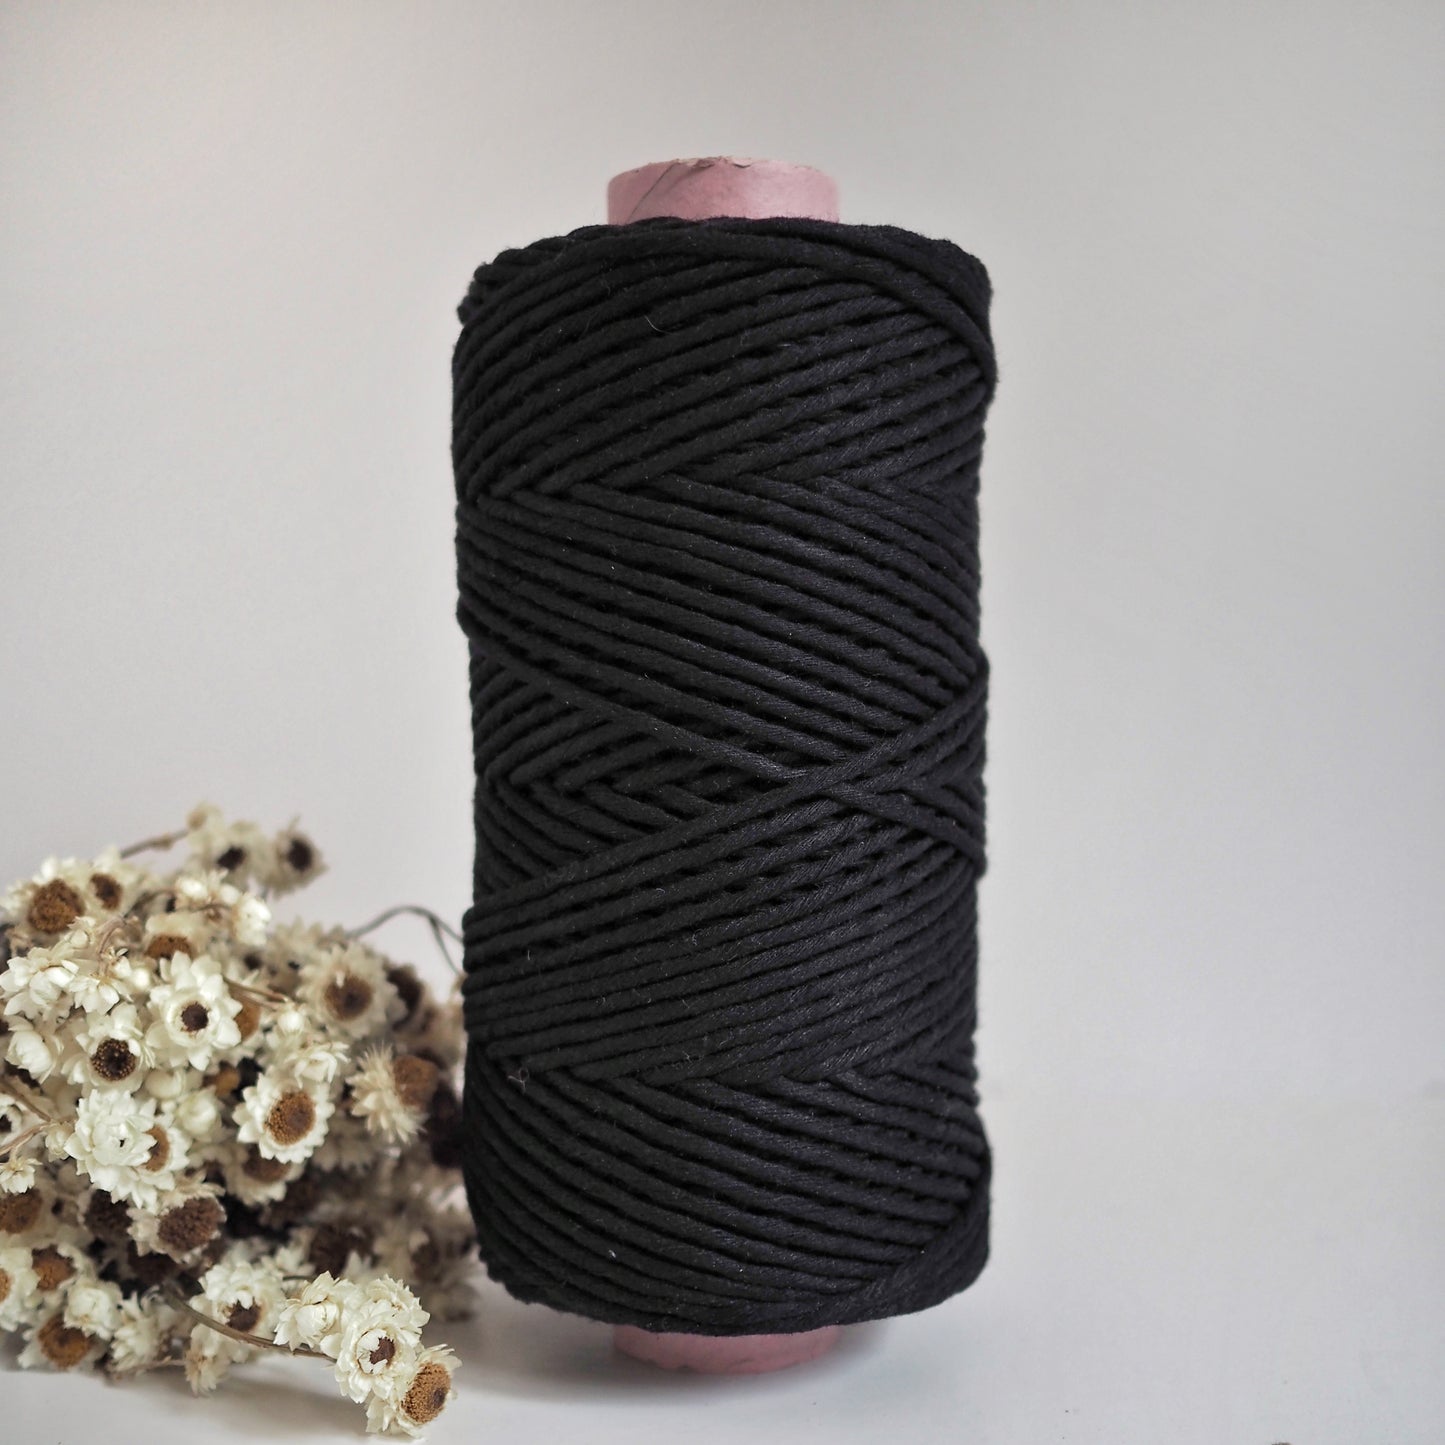 Black | 3mm Recycled Cotton String The Joyful Studio